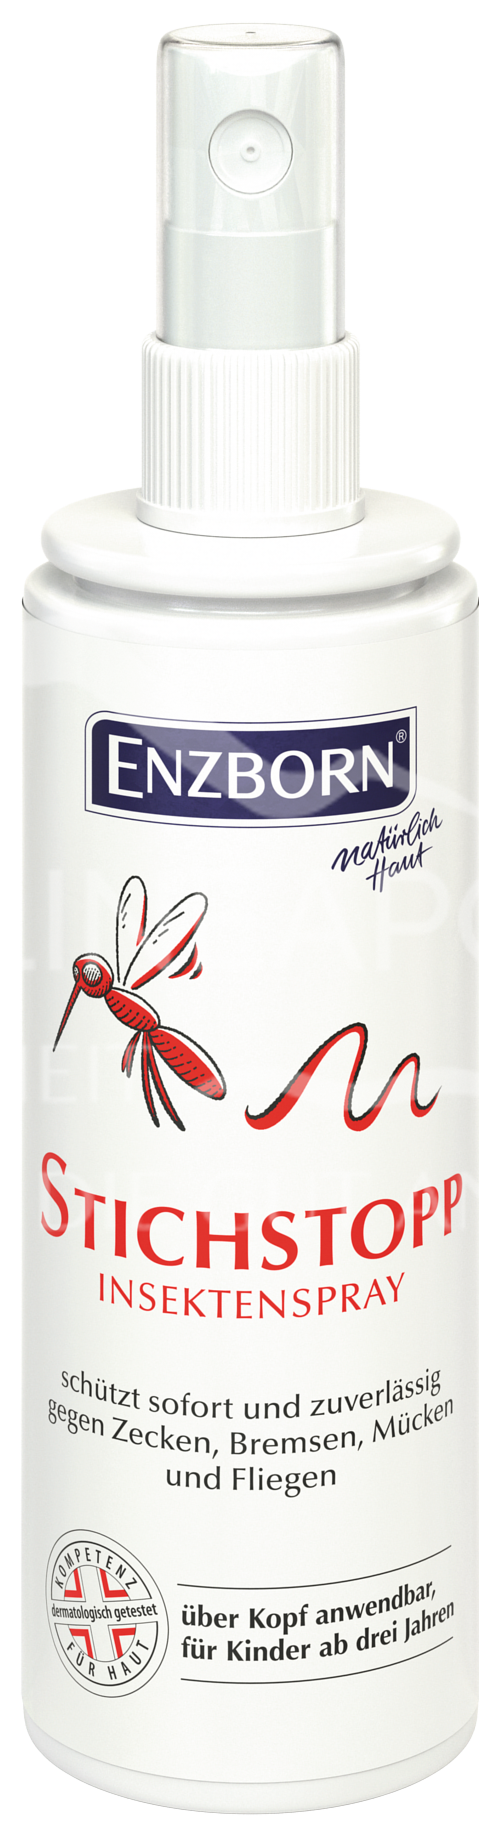 Enzborn Stich-Stopp Insektenspray